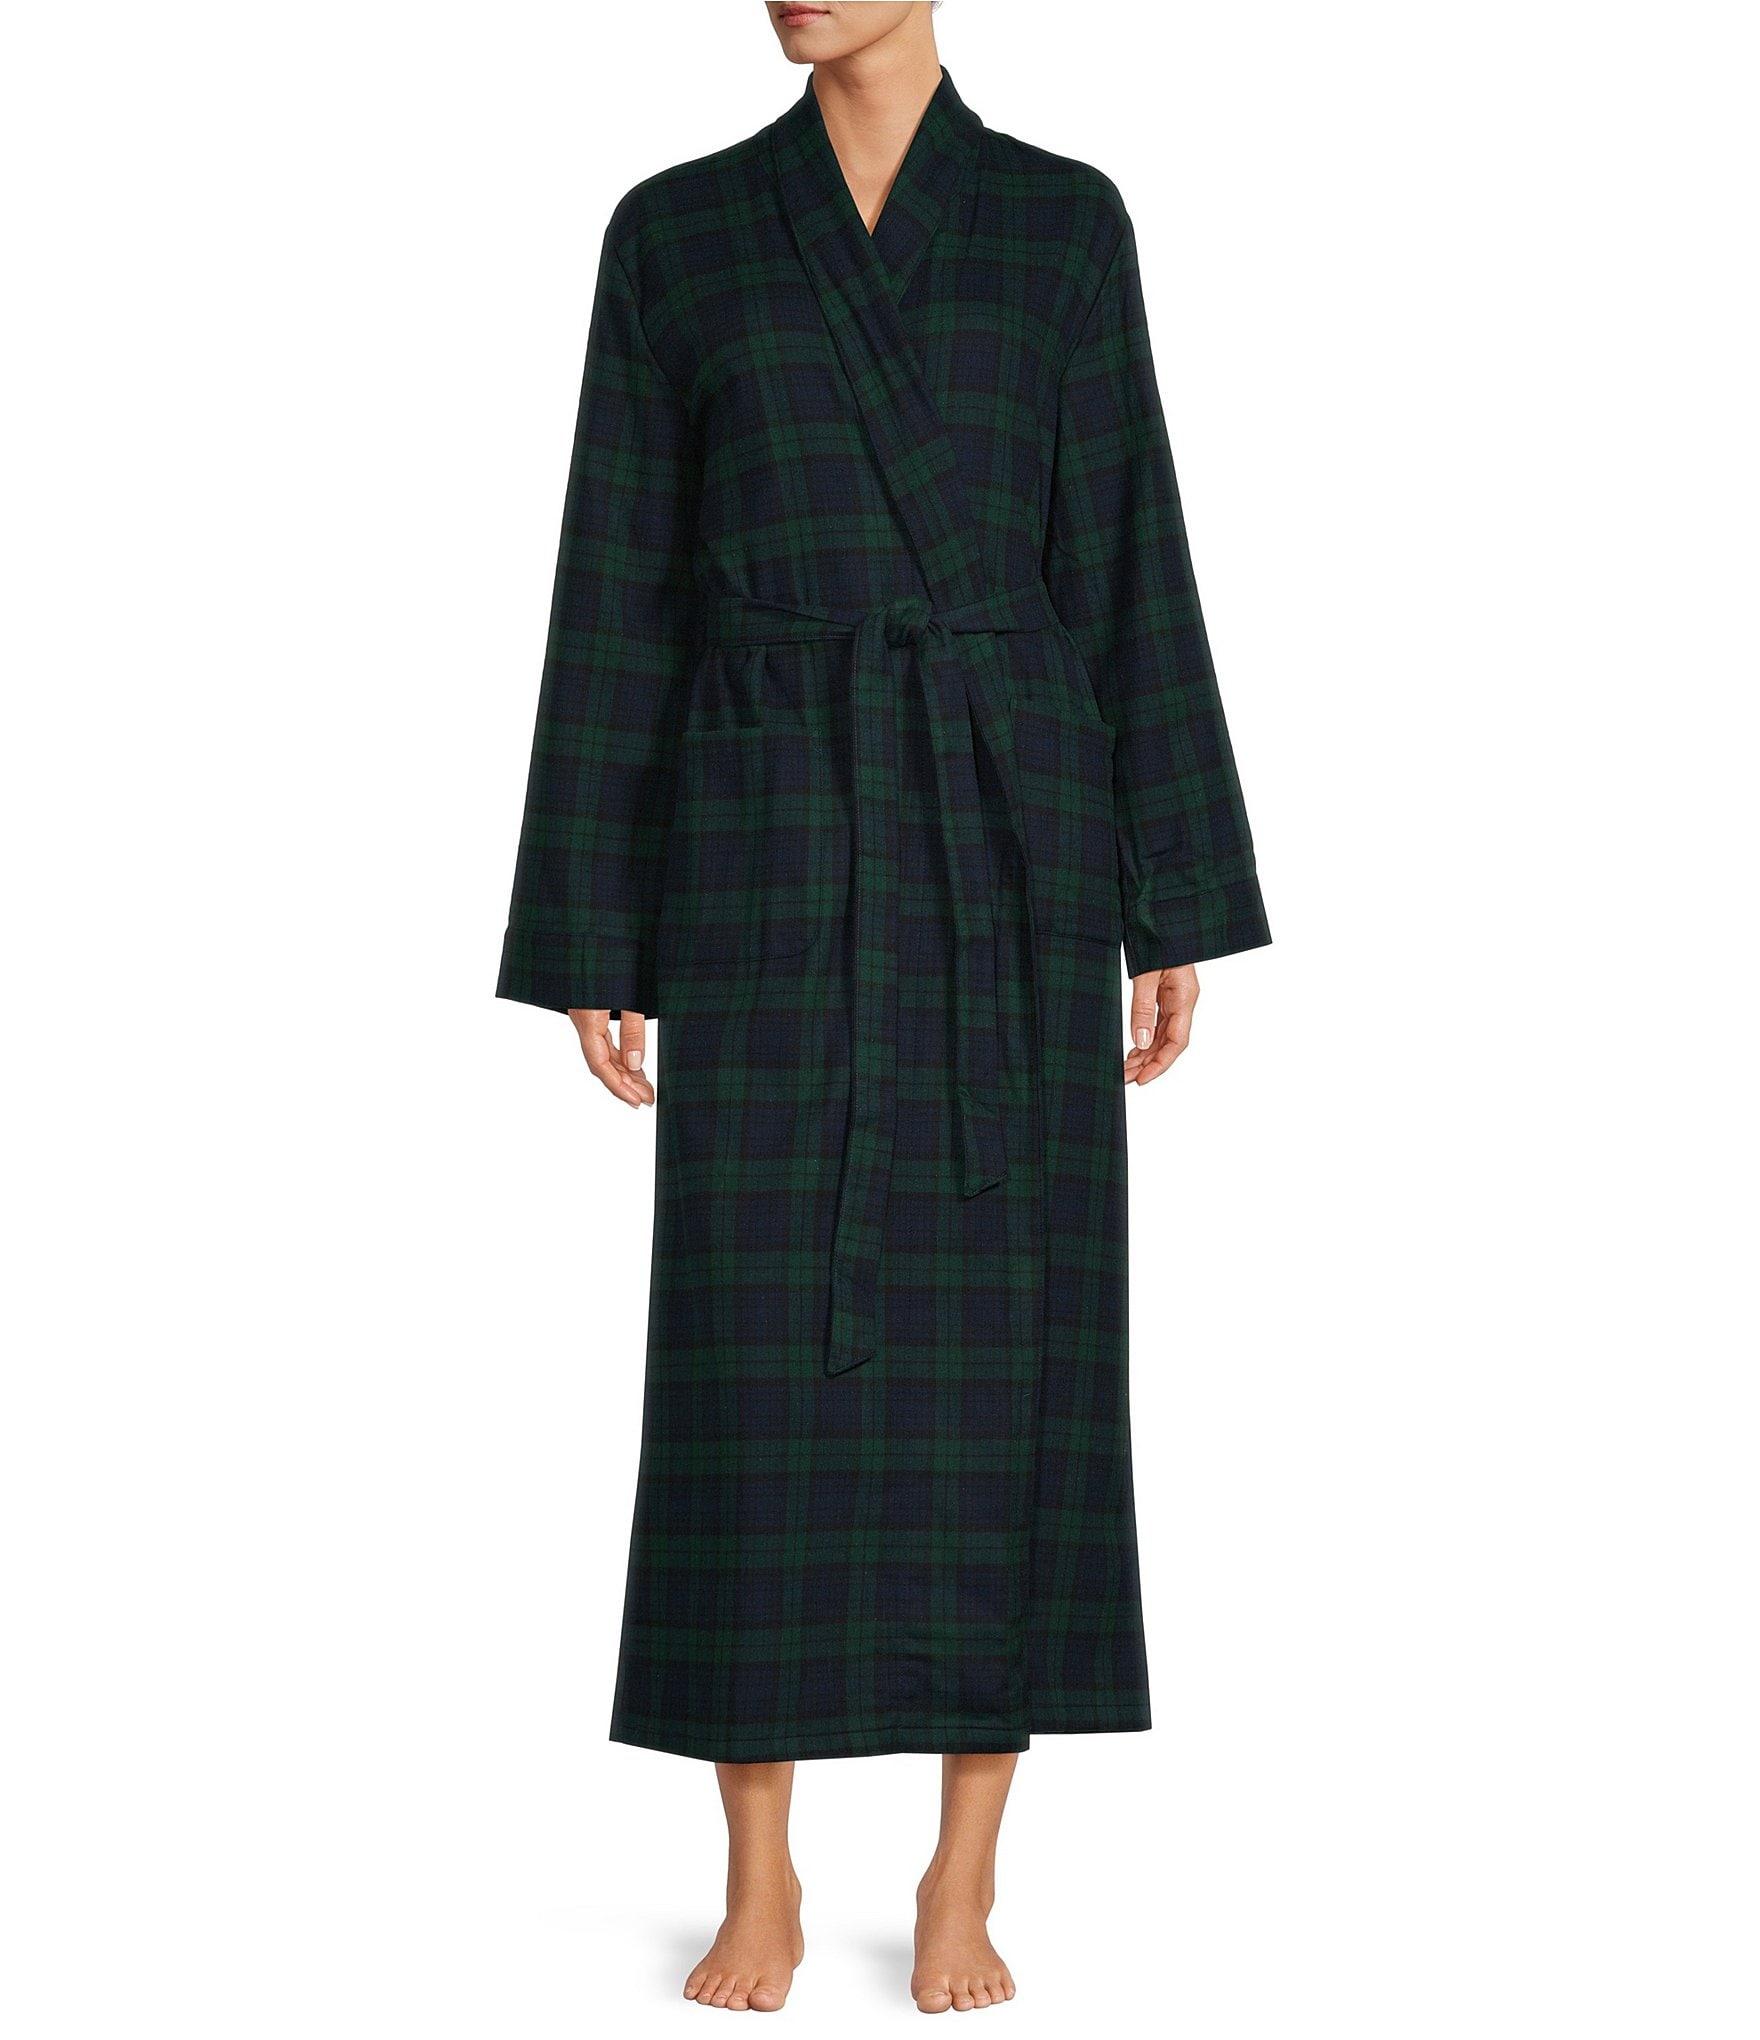 Men's Scotch Plaid Flannel Robe at L.L. Bean